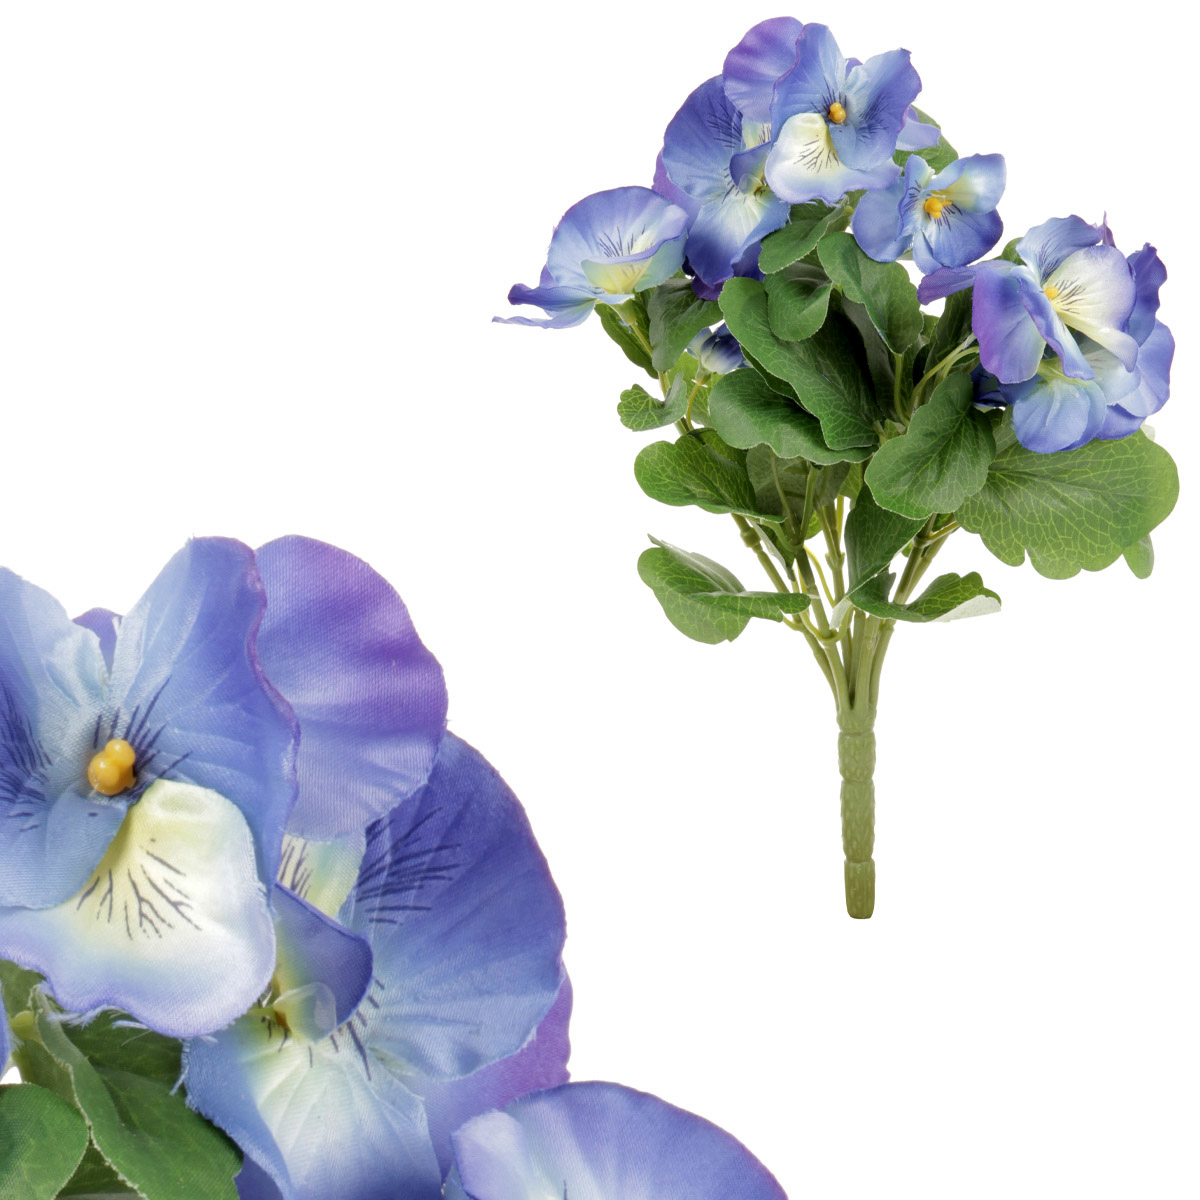 Maceška - kytice z umělých květin, barva modrá.